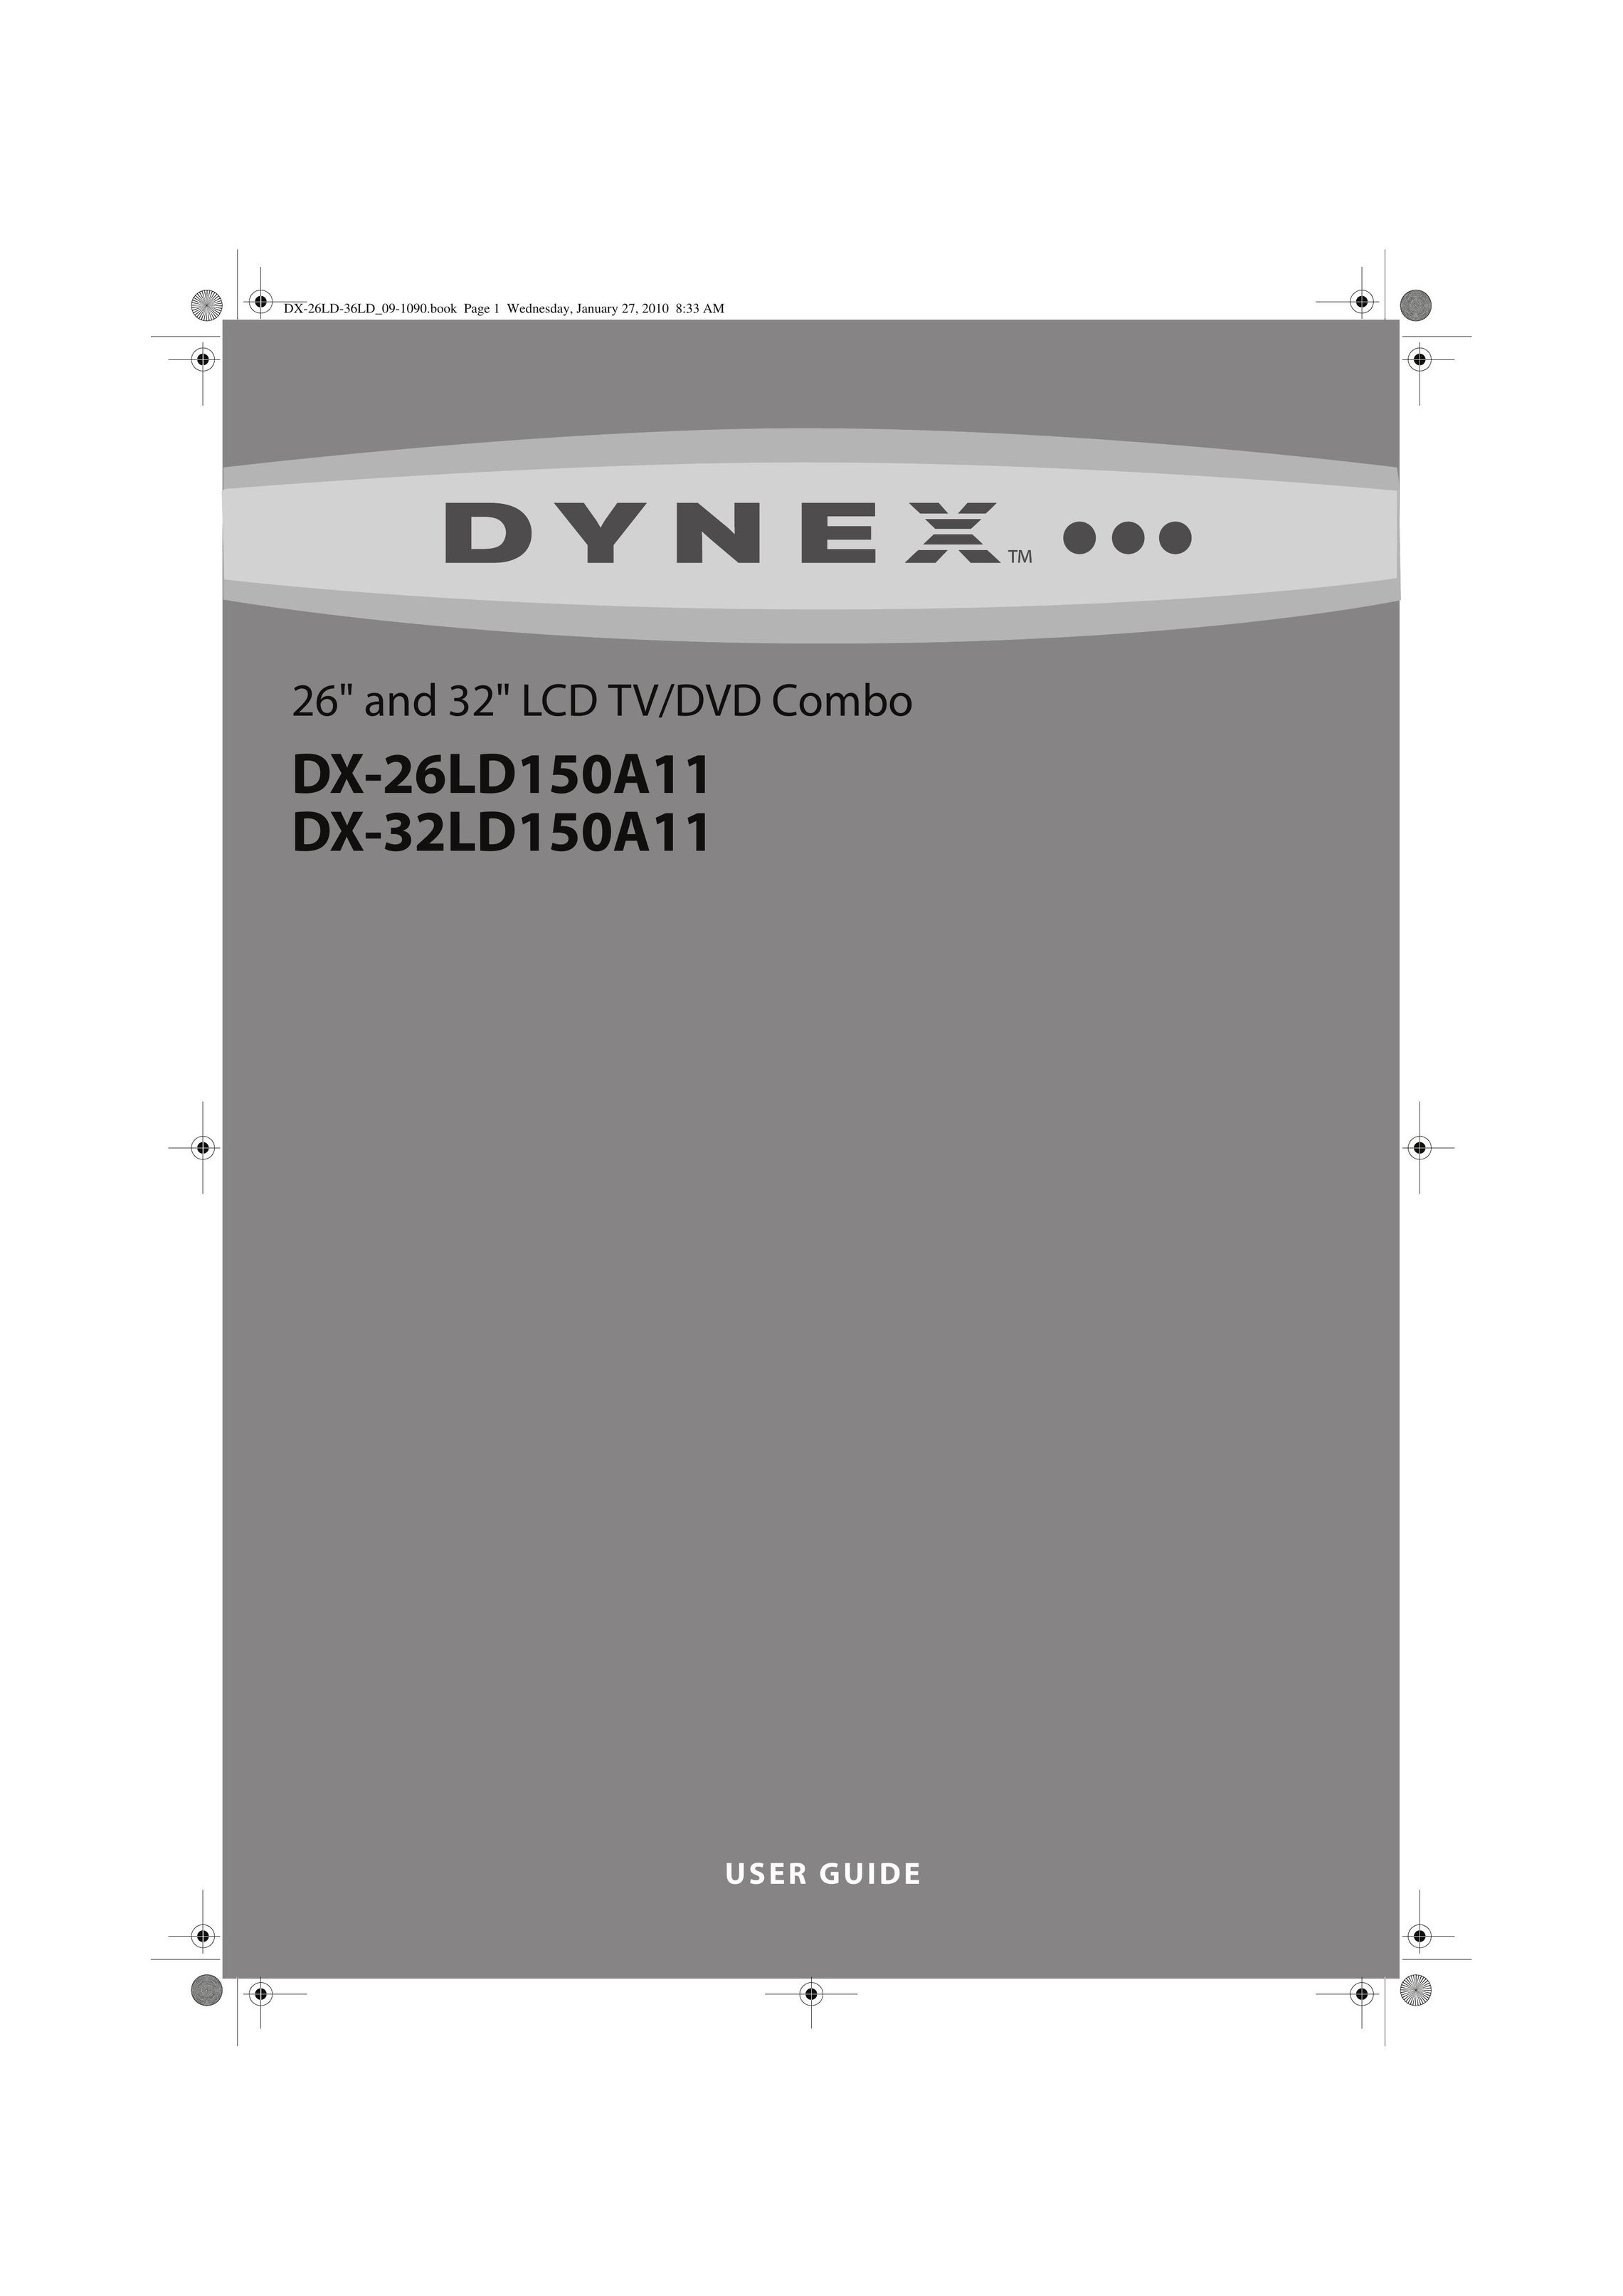 Dynex DX-32LD150A11 TV DVD Combo User Manual